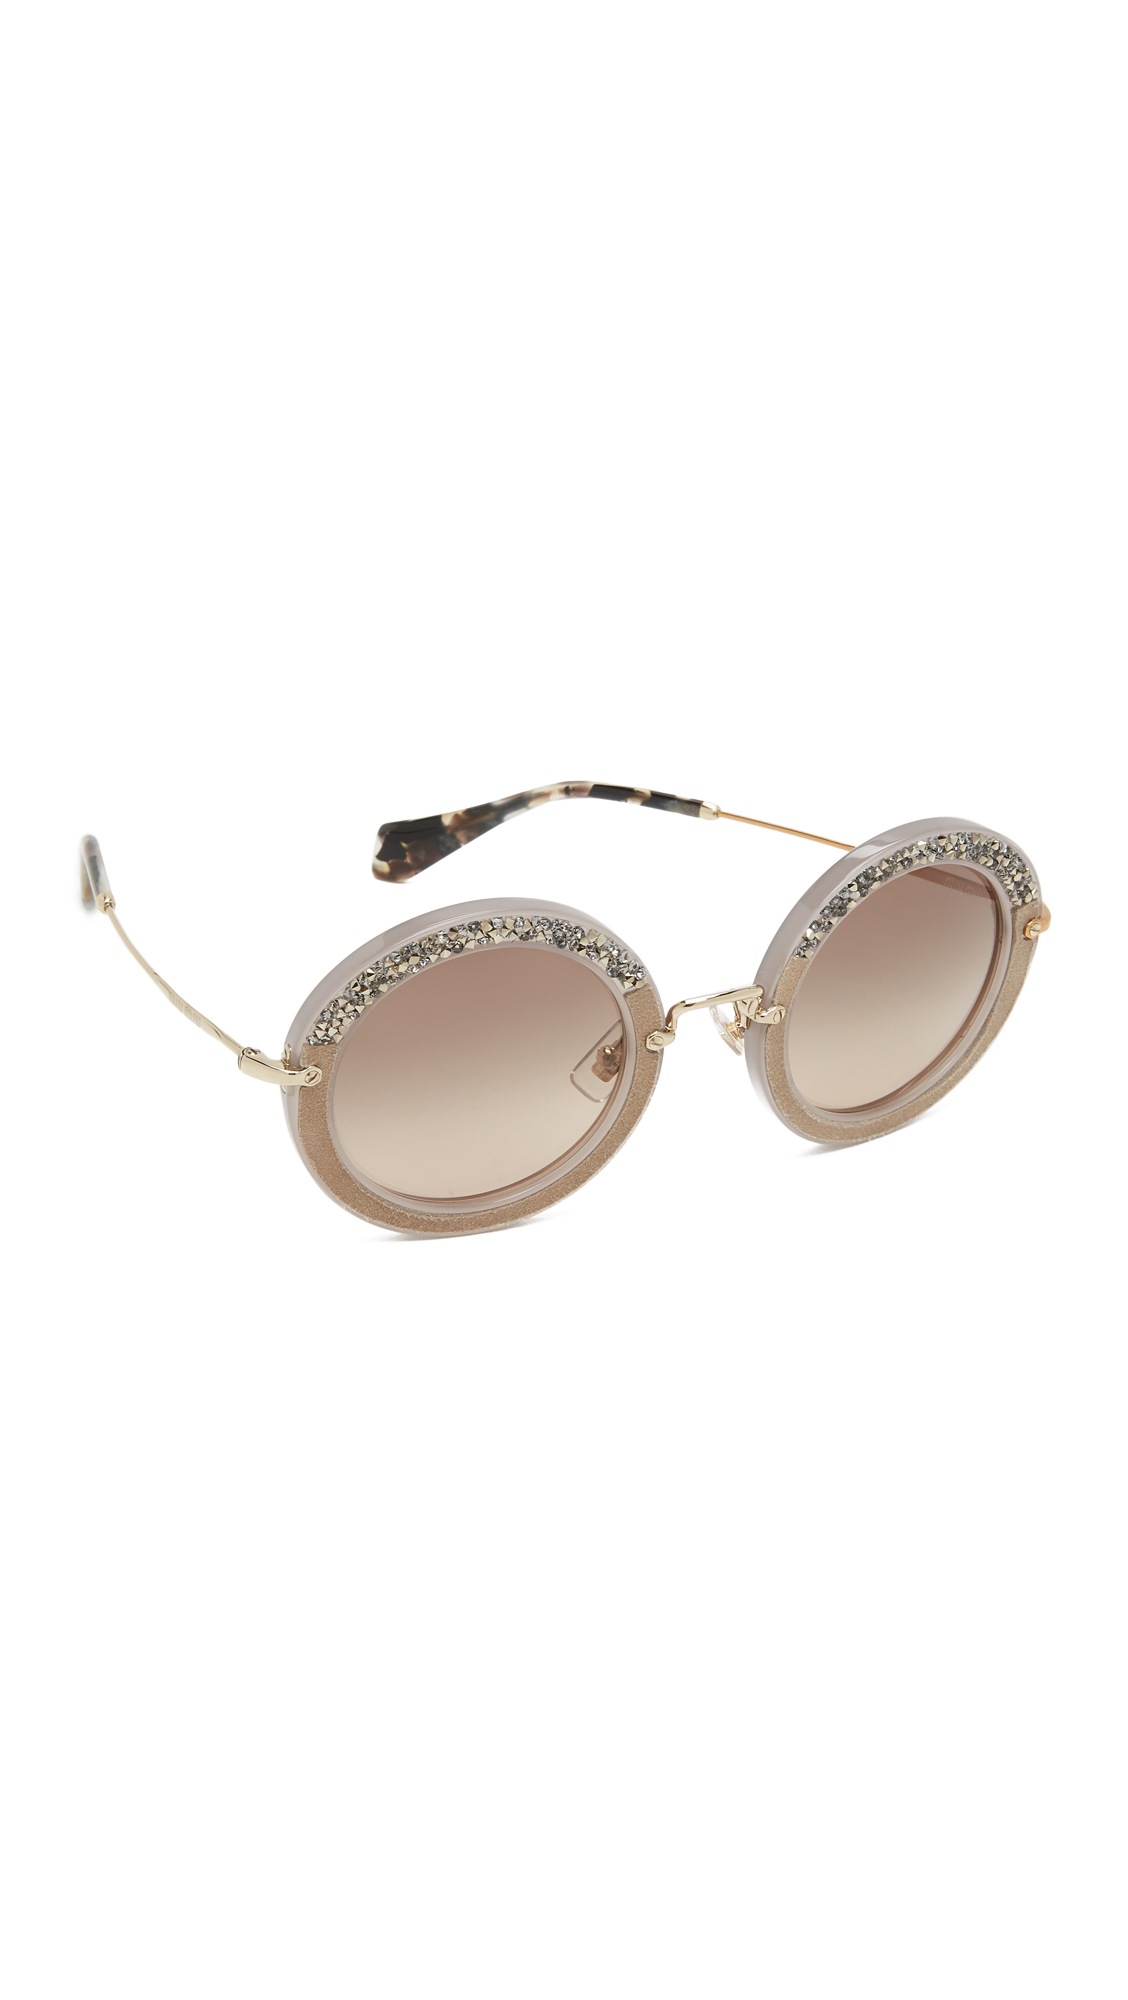 Miu Miu Round Crystal Sunglasses in Gray | Lyst